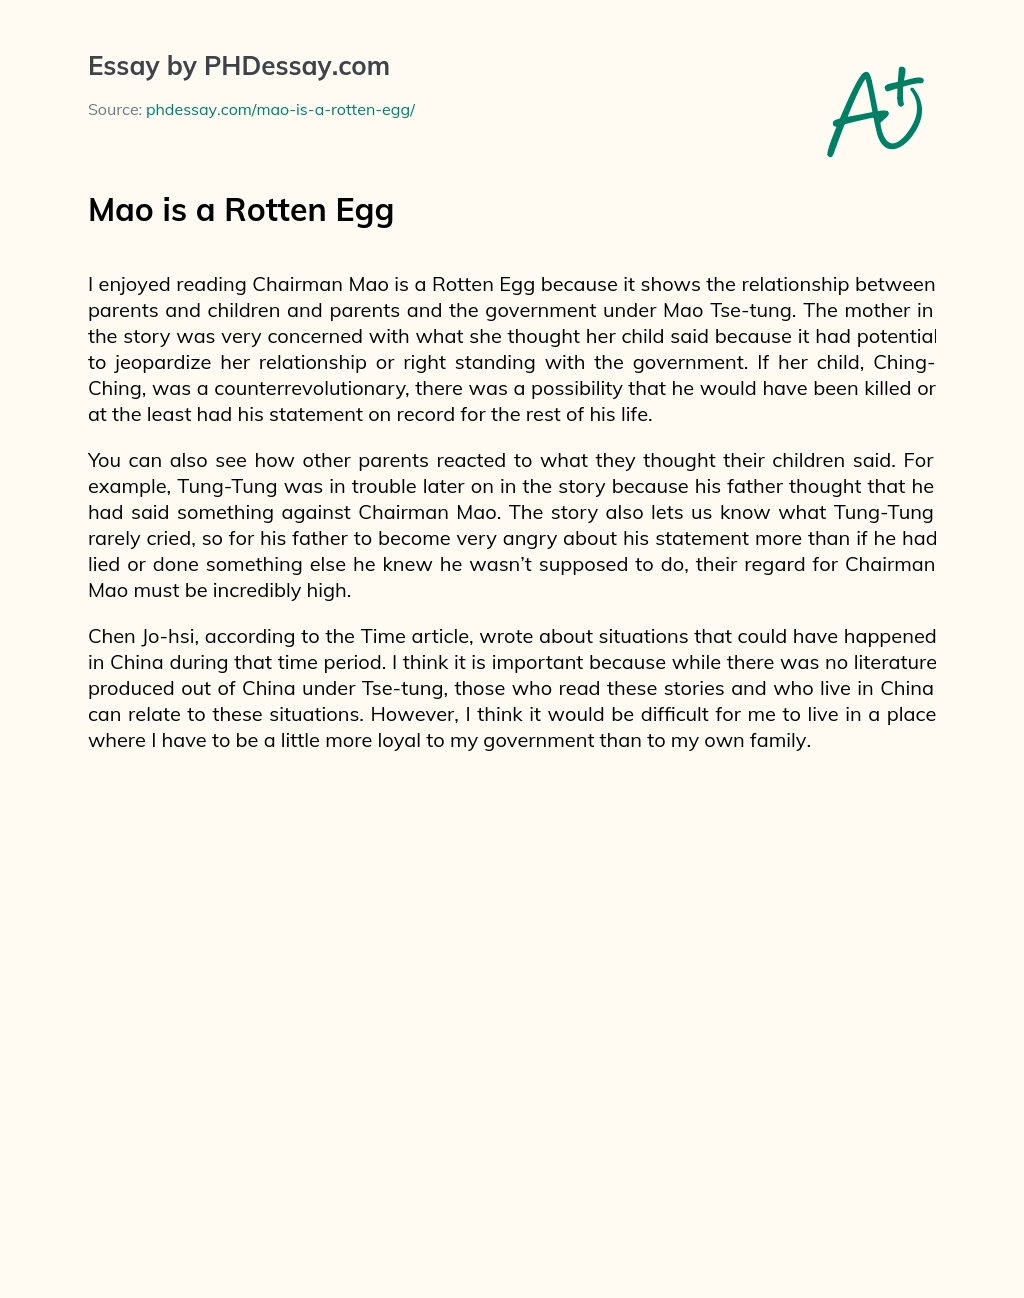 Mao is a Rotten Egg essay